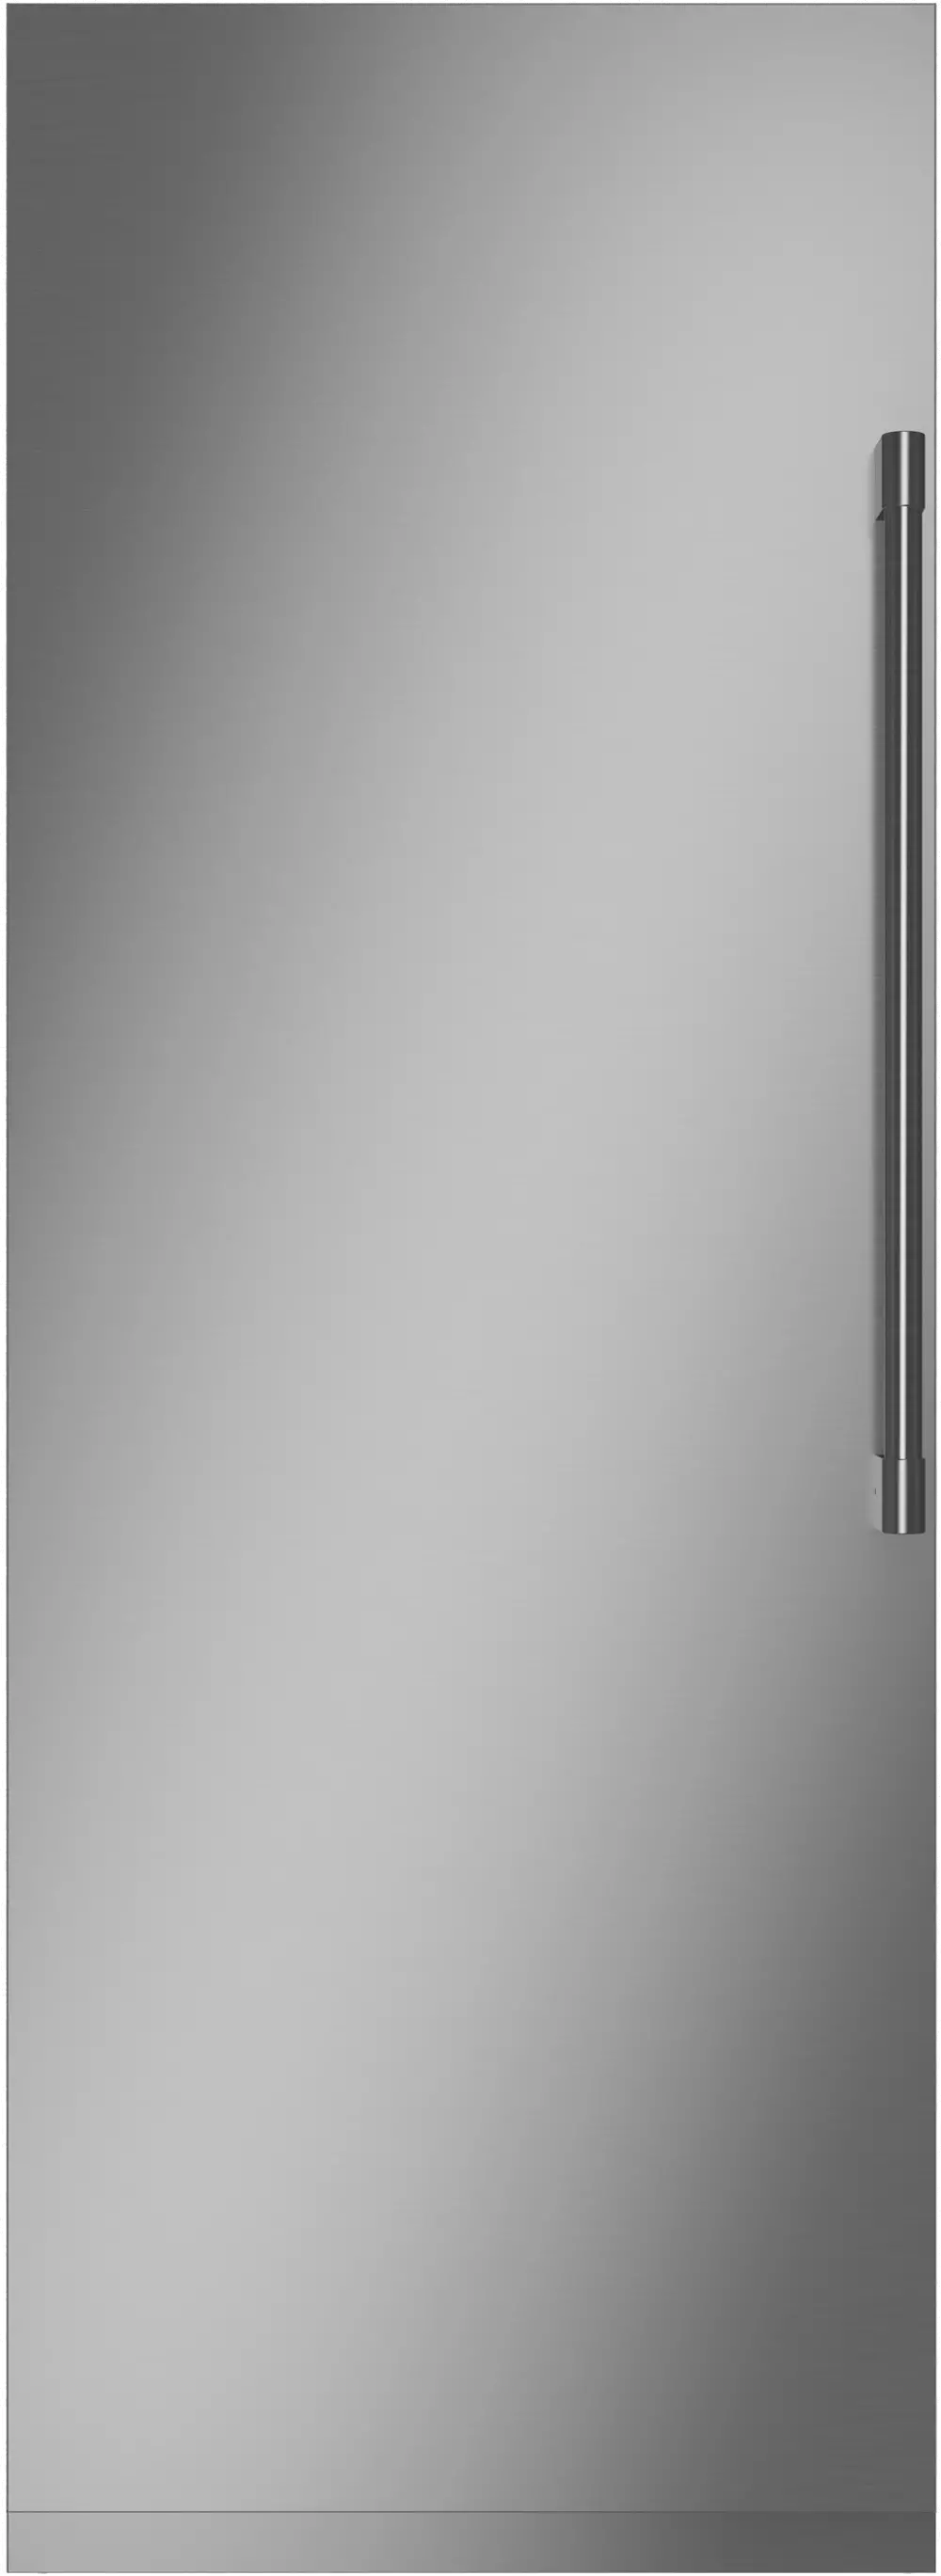 ZIF301NPNII Monogram 30 Inch Column Freezer - 16.7 cu. ft. Panel Ready-1